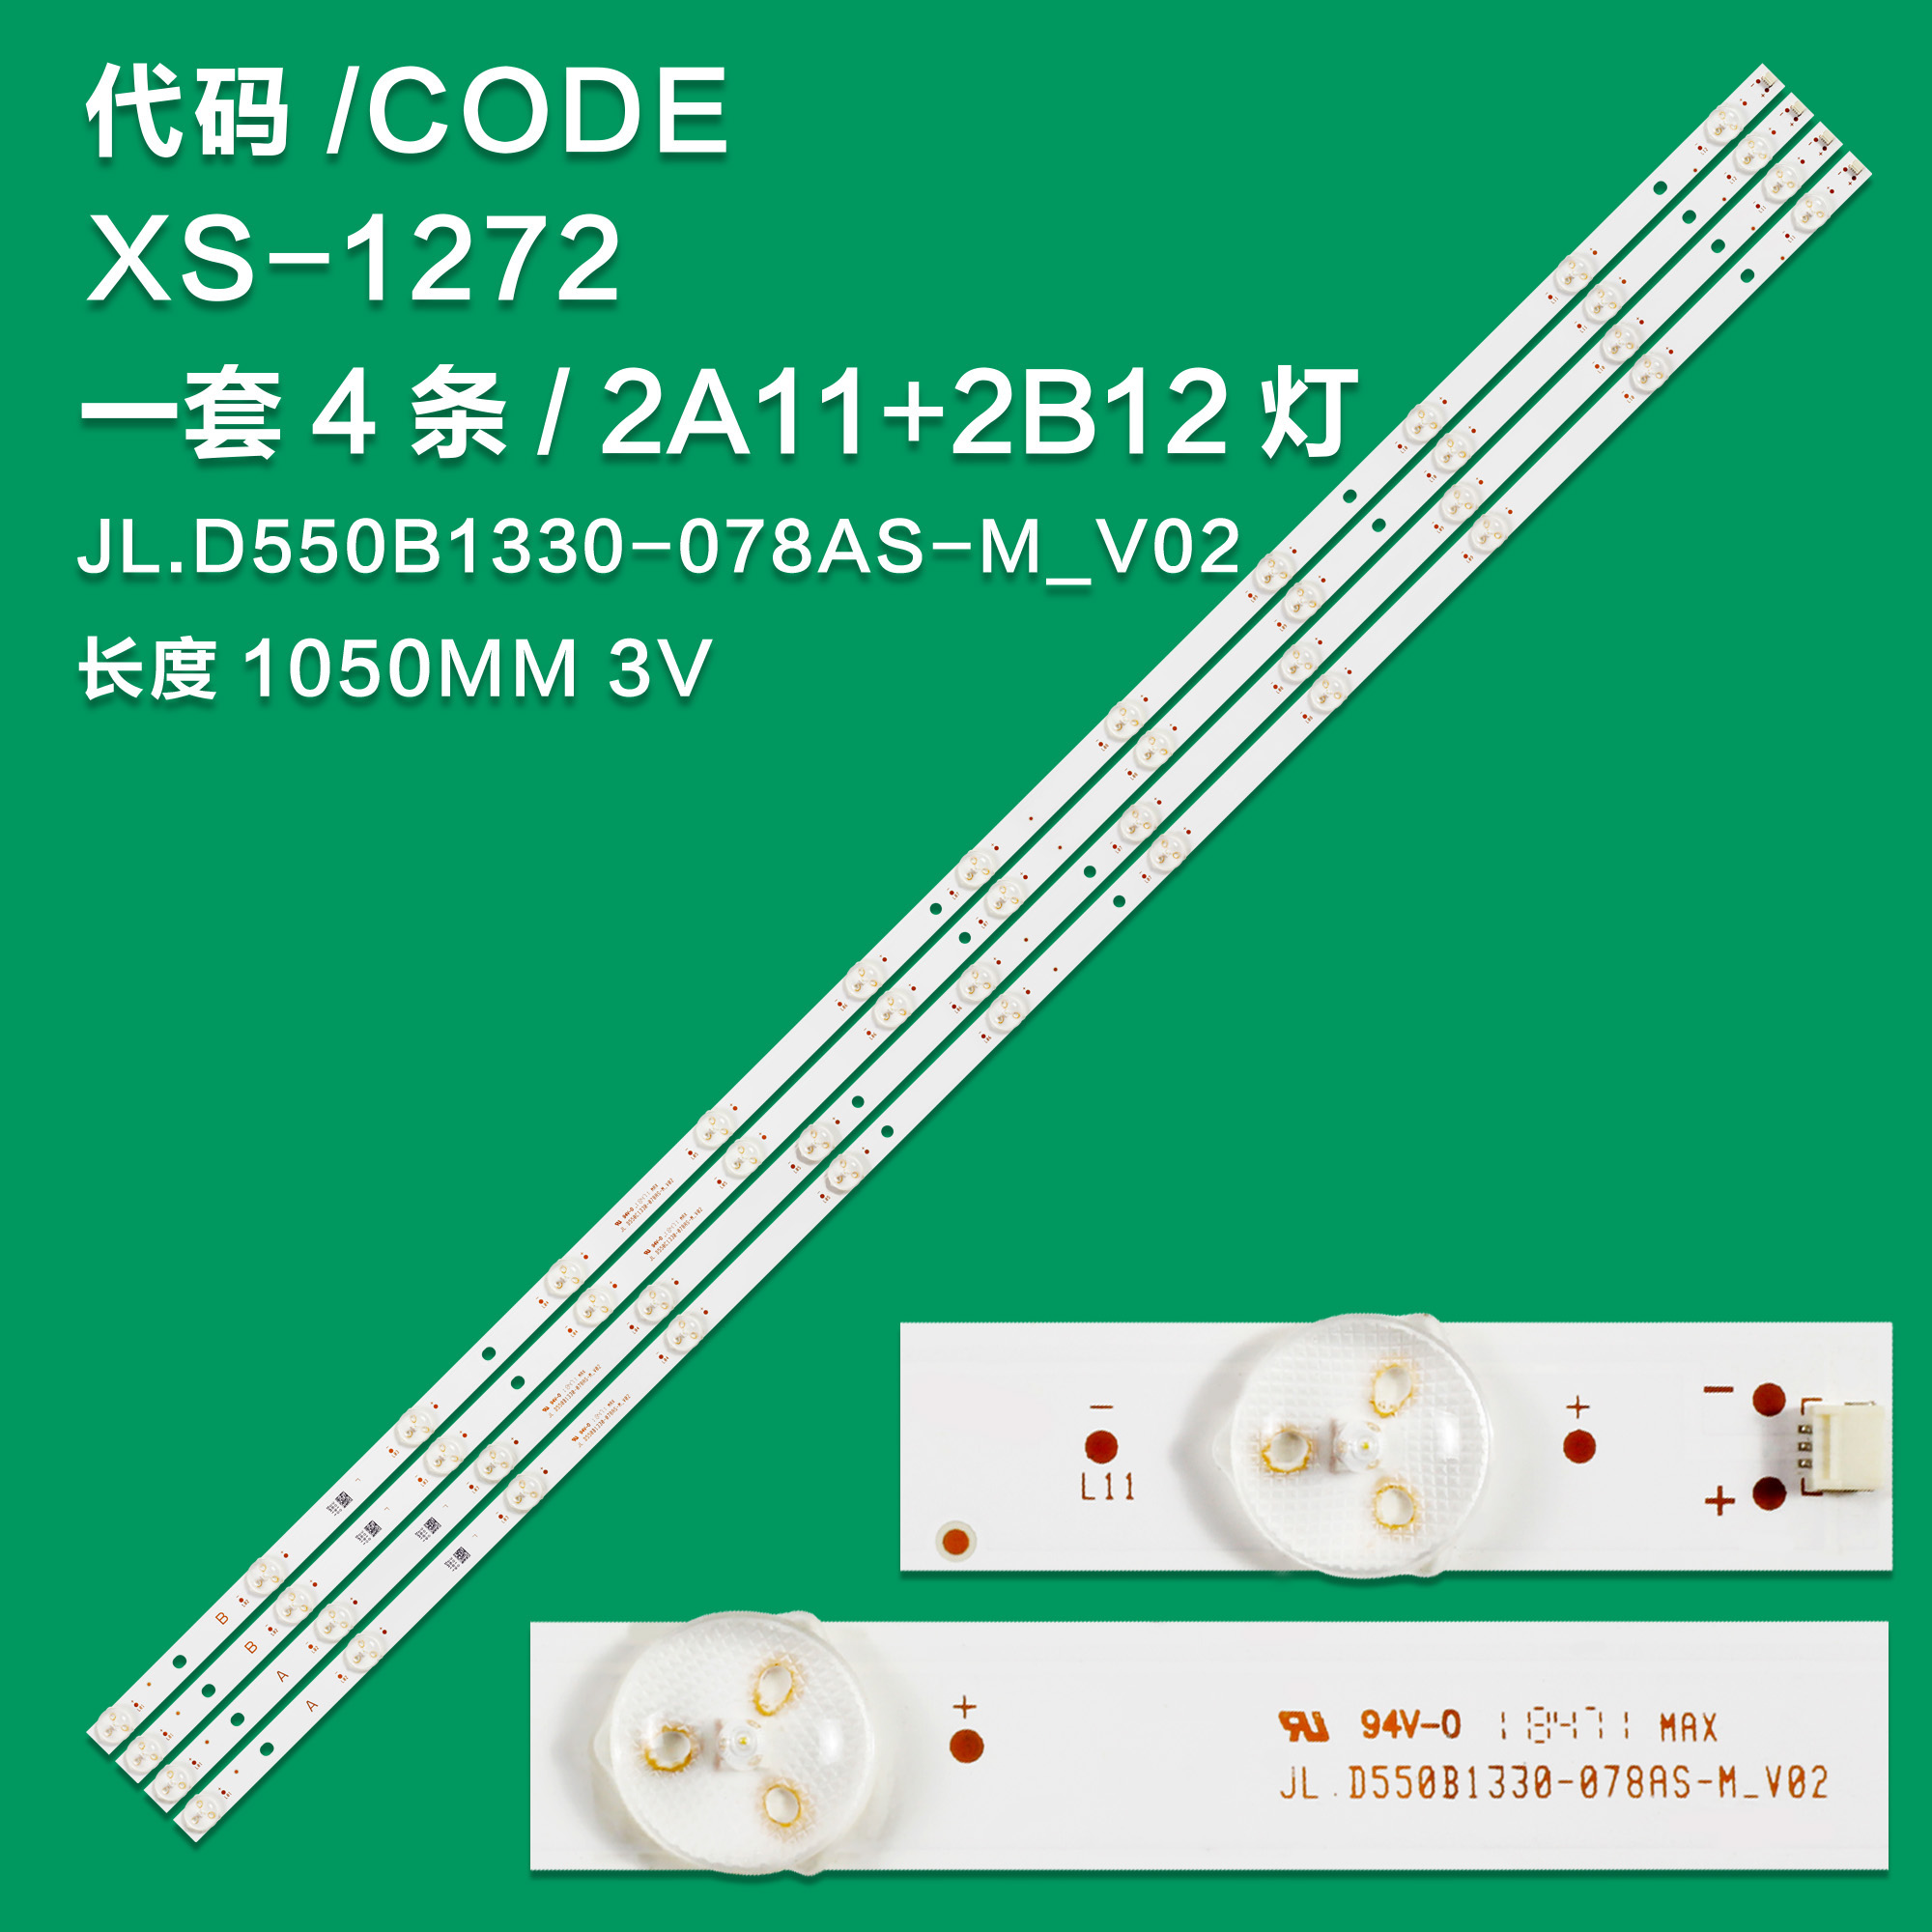 XS-1272 New LCD TV Backlight Strip JL.D550B1330-078AS-M_V02/JL.D550B1330-078AS-M_V01 Suitable For Toshiba 55HK6100U 55HL7530U